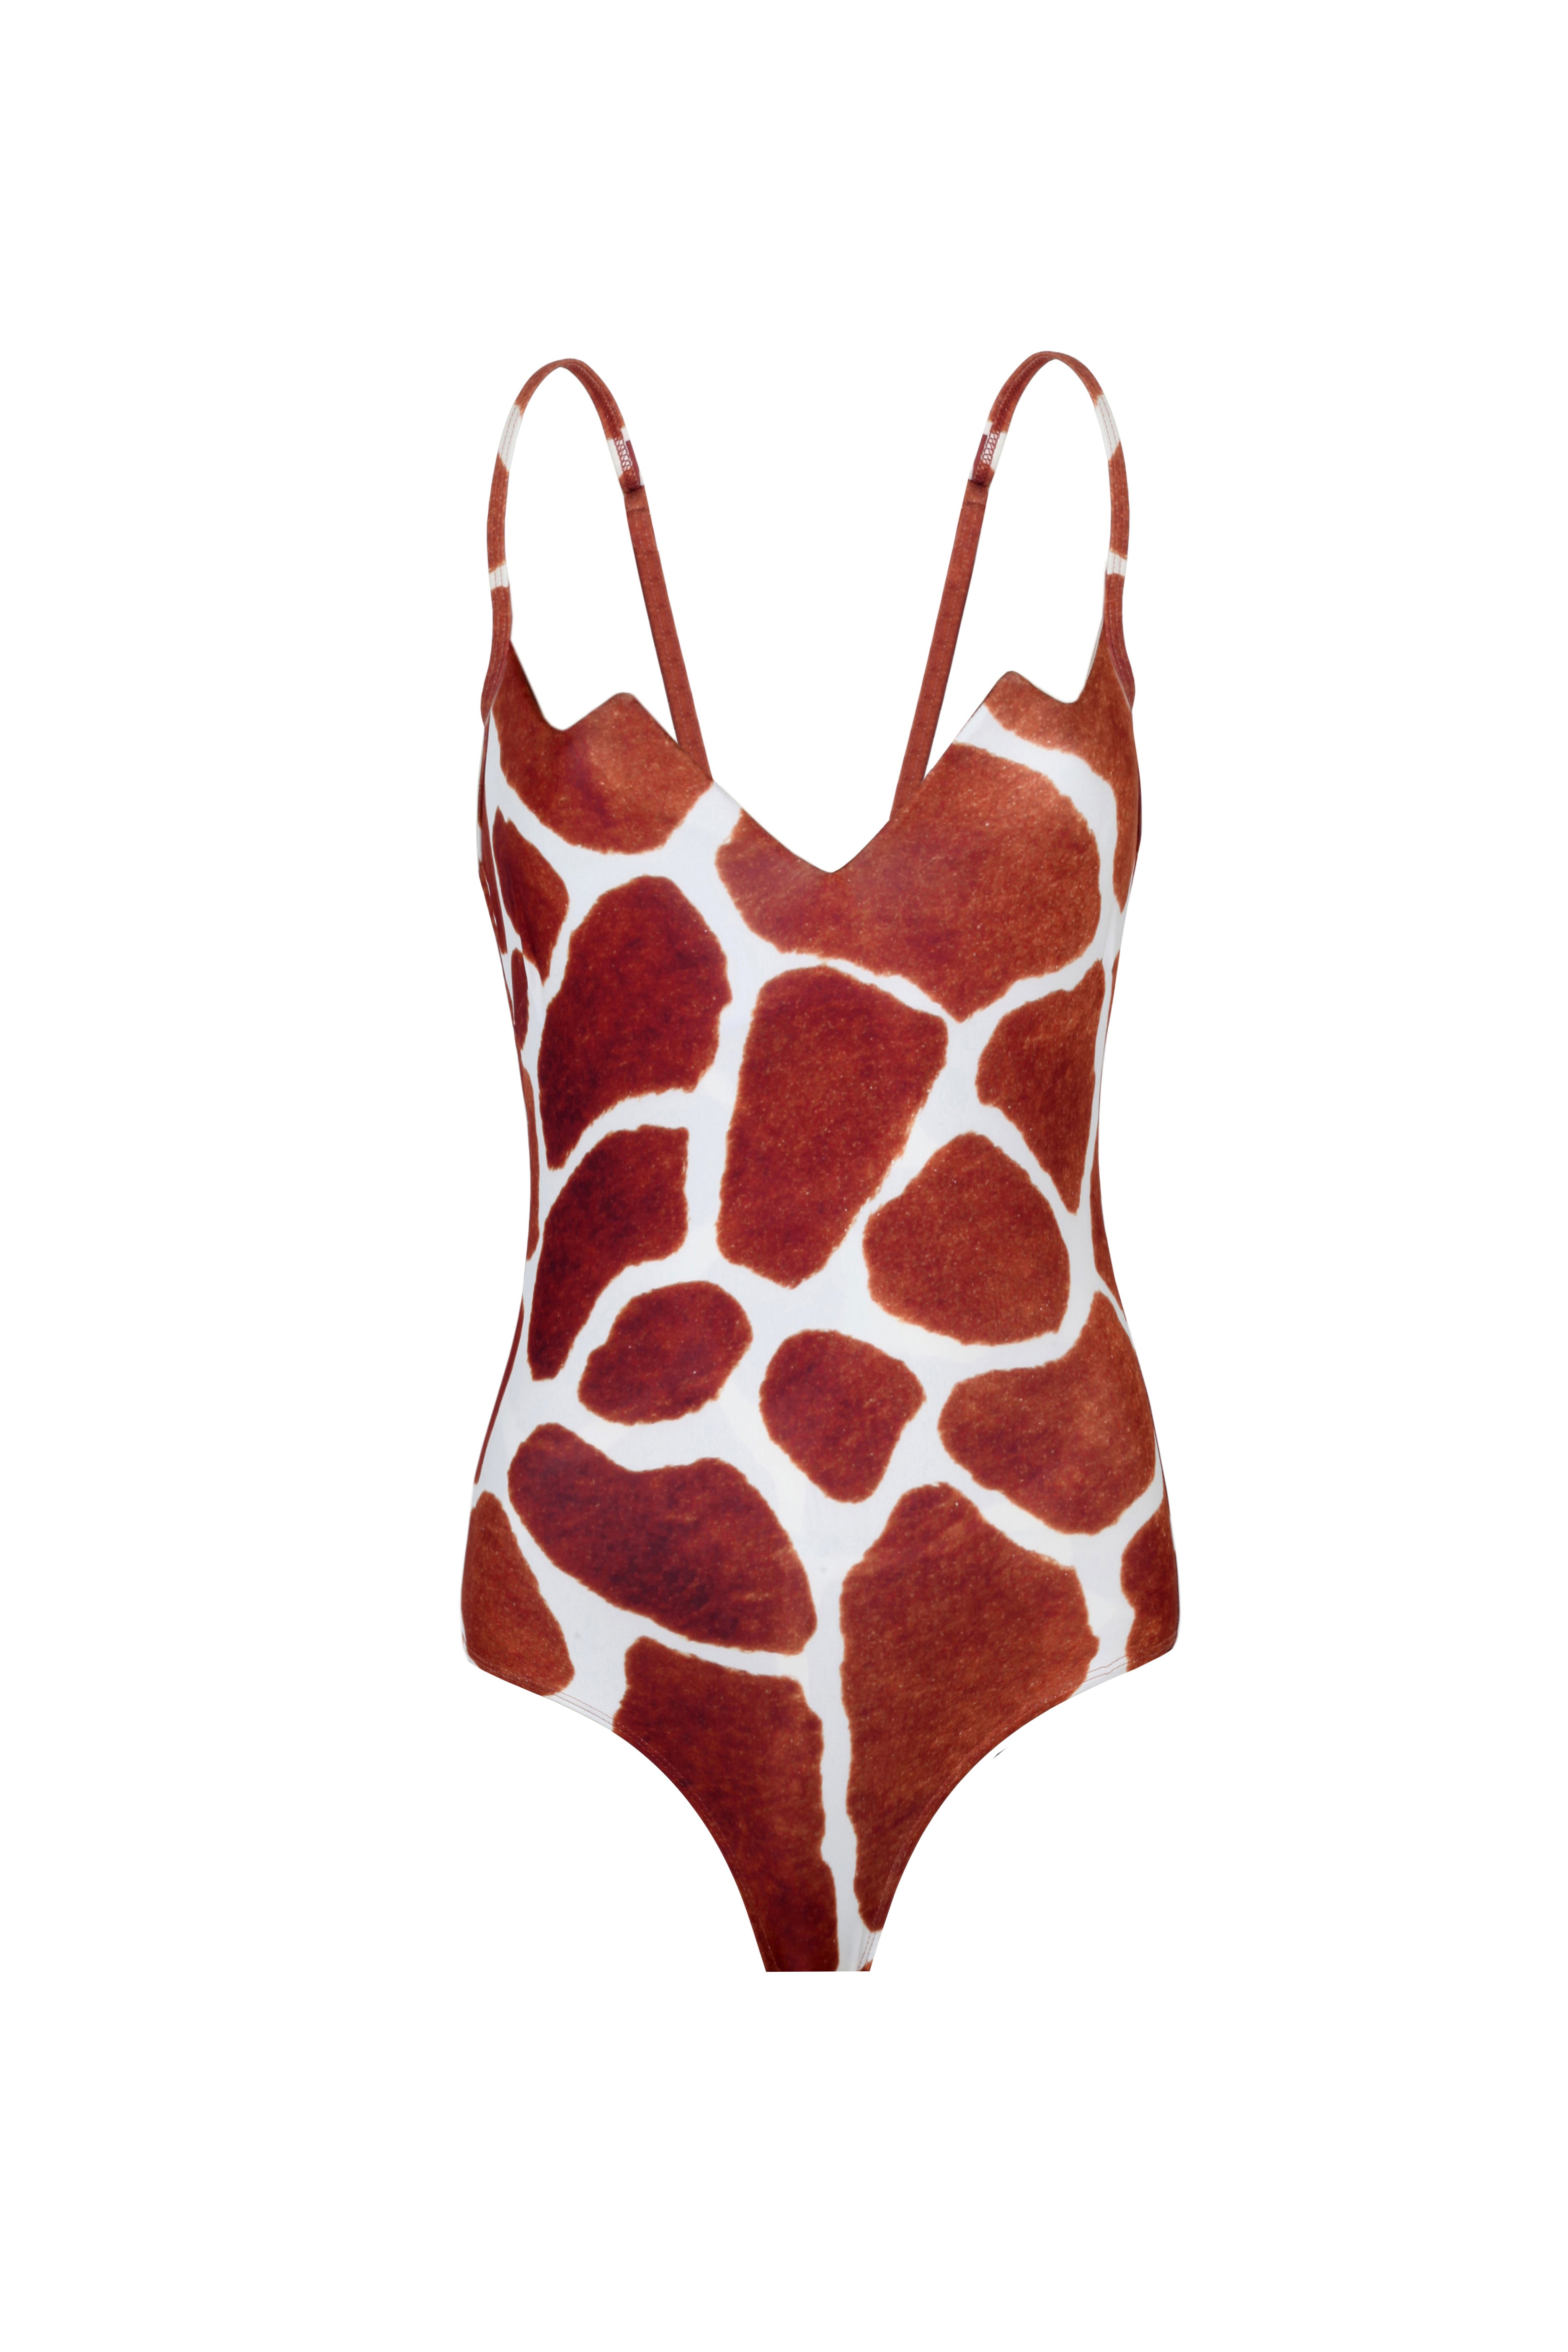 Gear Up For Summer In Bold Animal-Print Swimwear